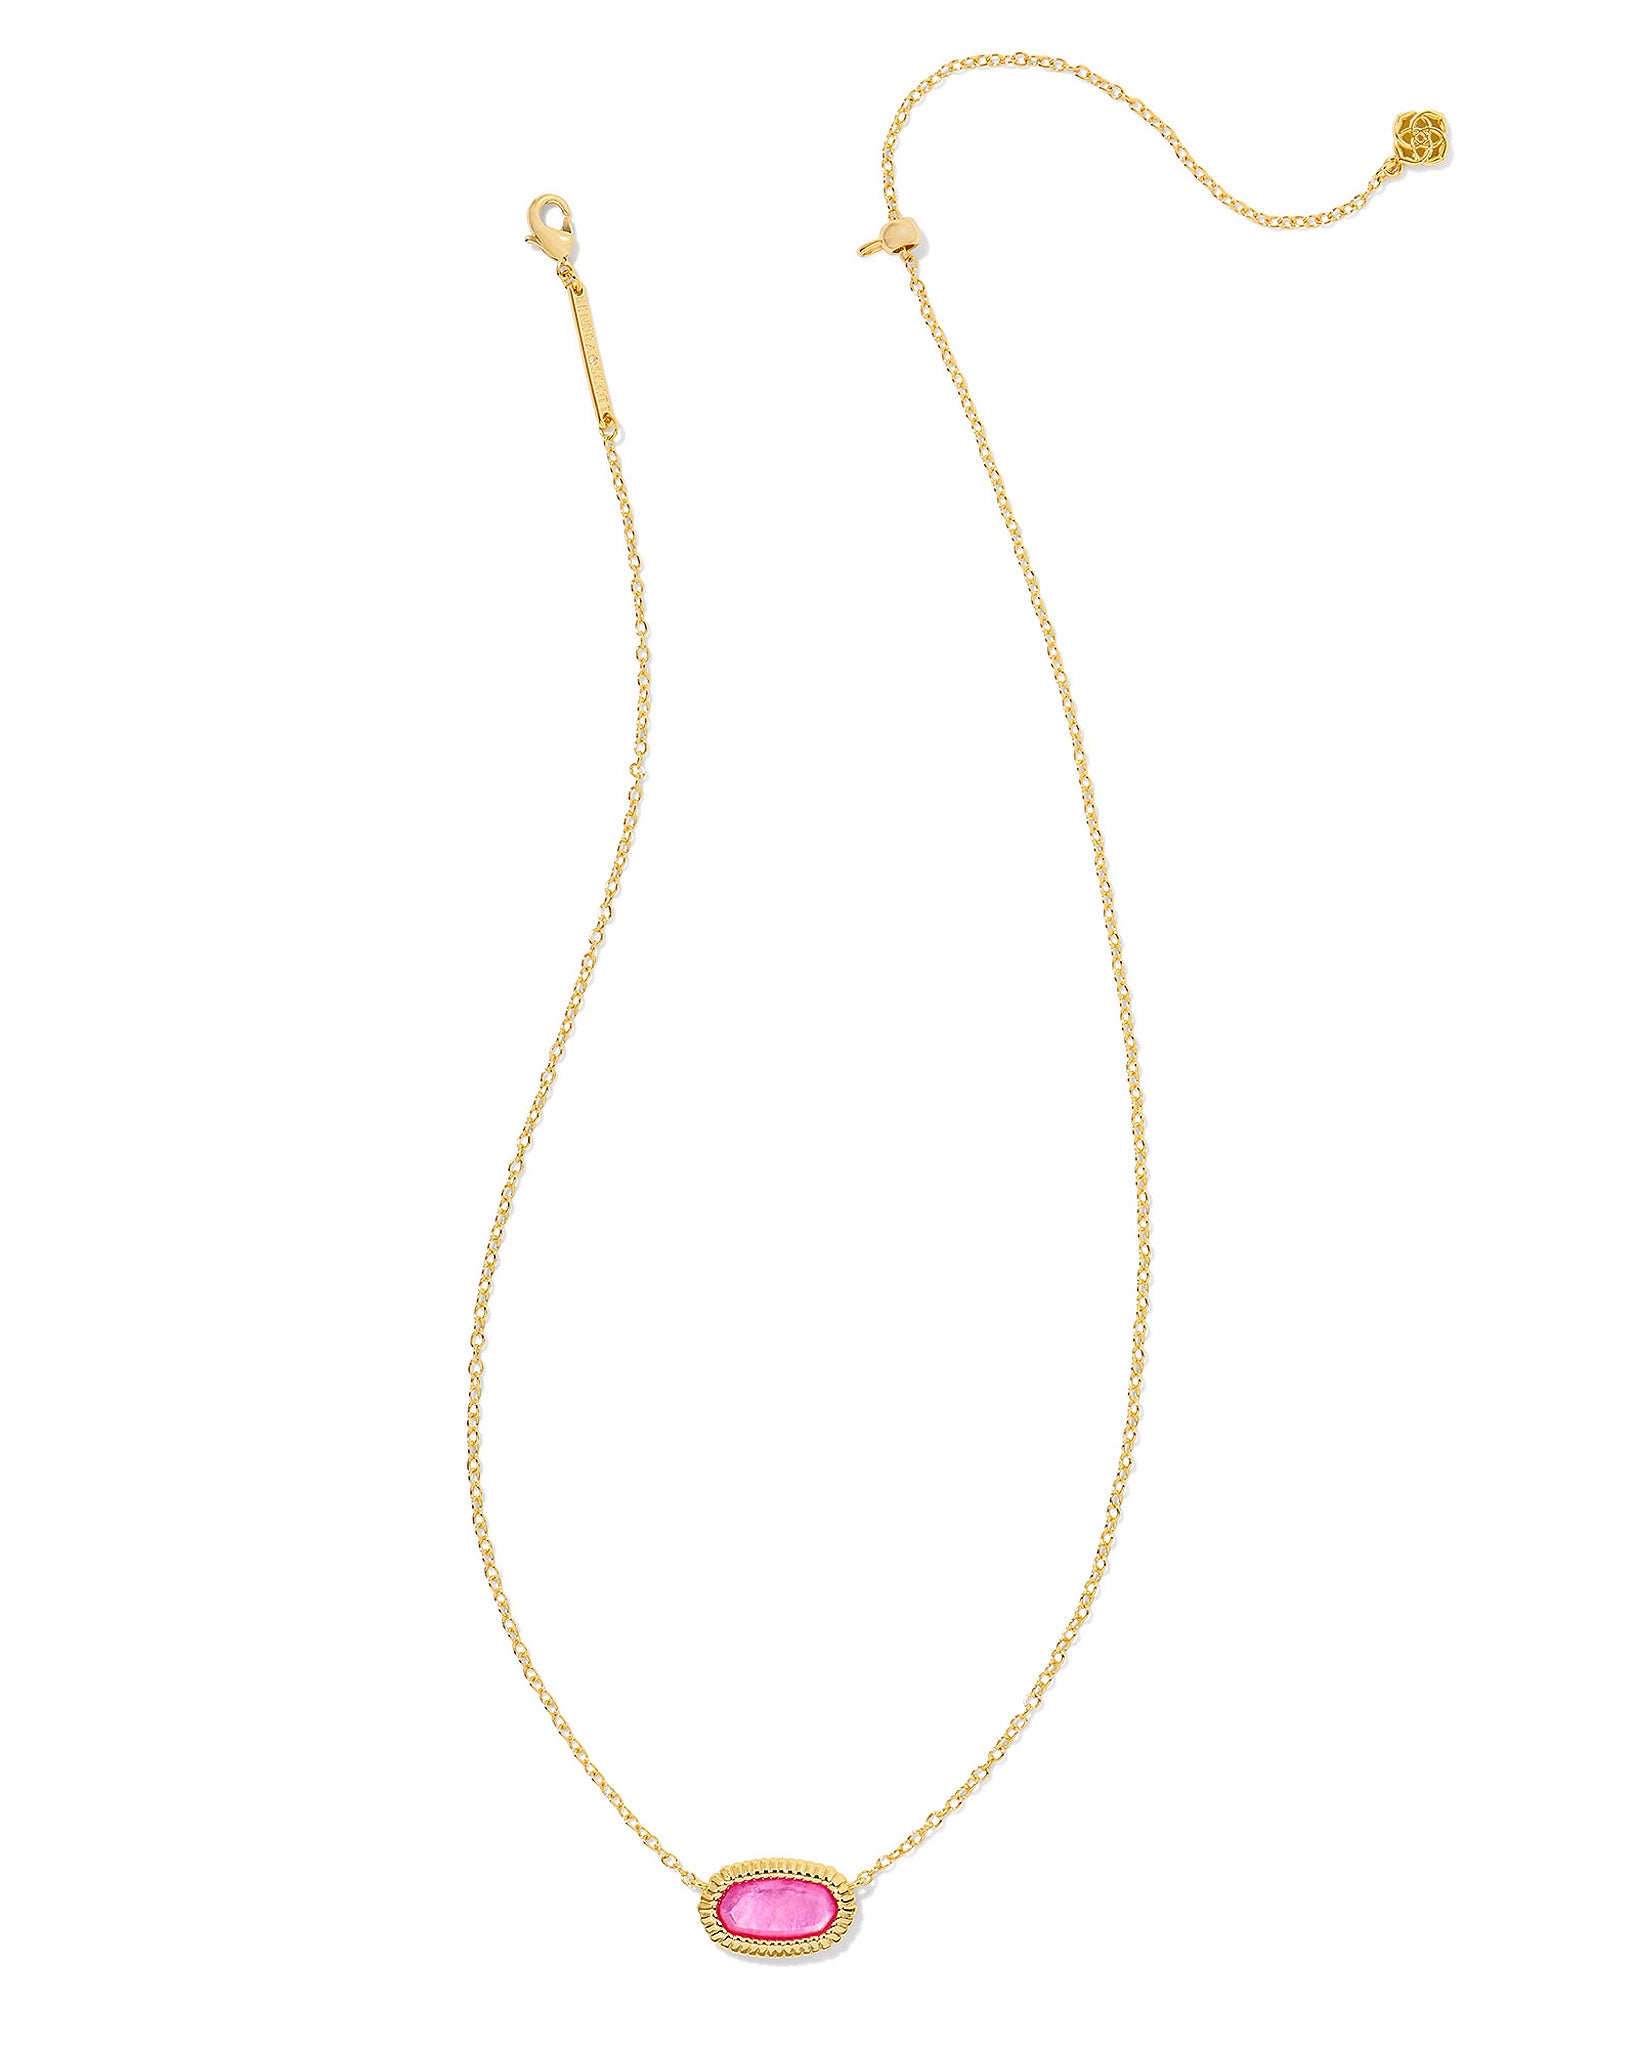 Kendra Scott Elisa Ridge Framed Oval Pendant Necklace in Azalea Illusion and Gold Plated